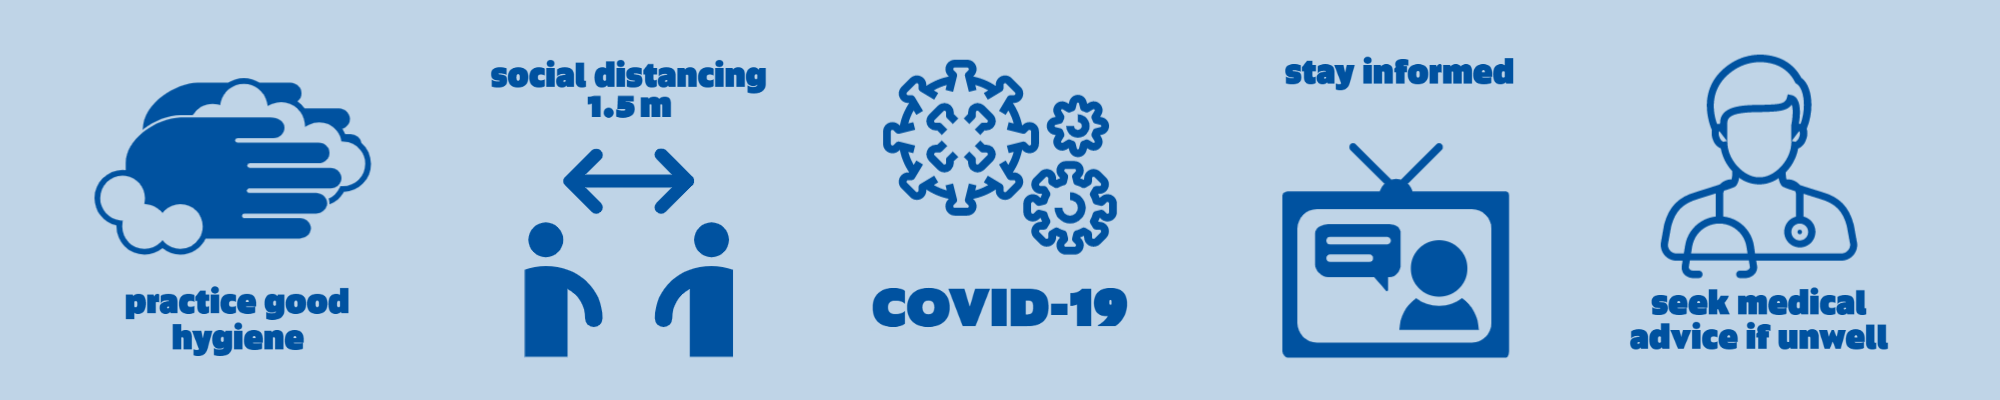 COVID-19 banner